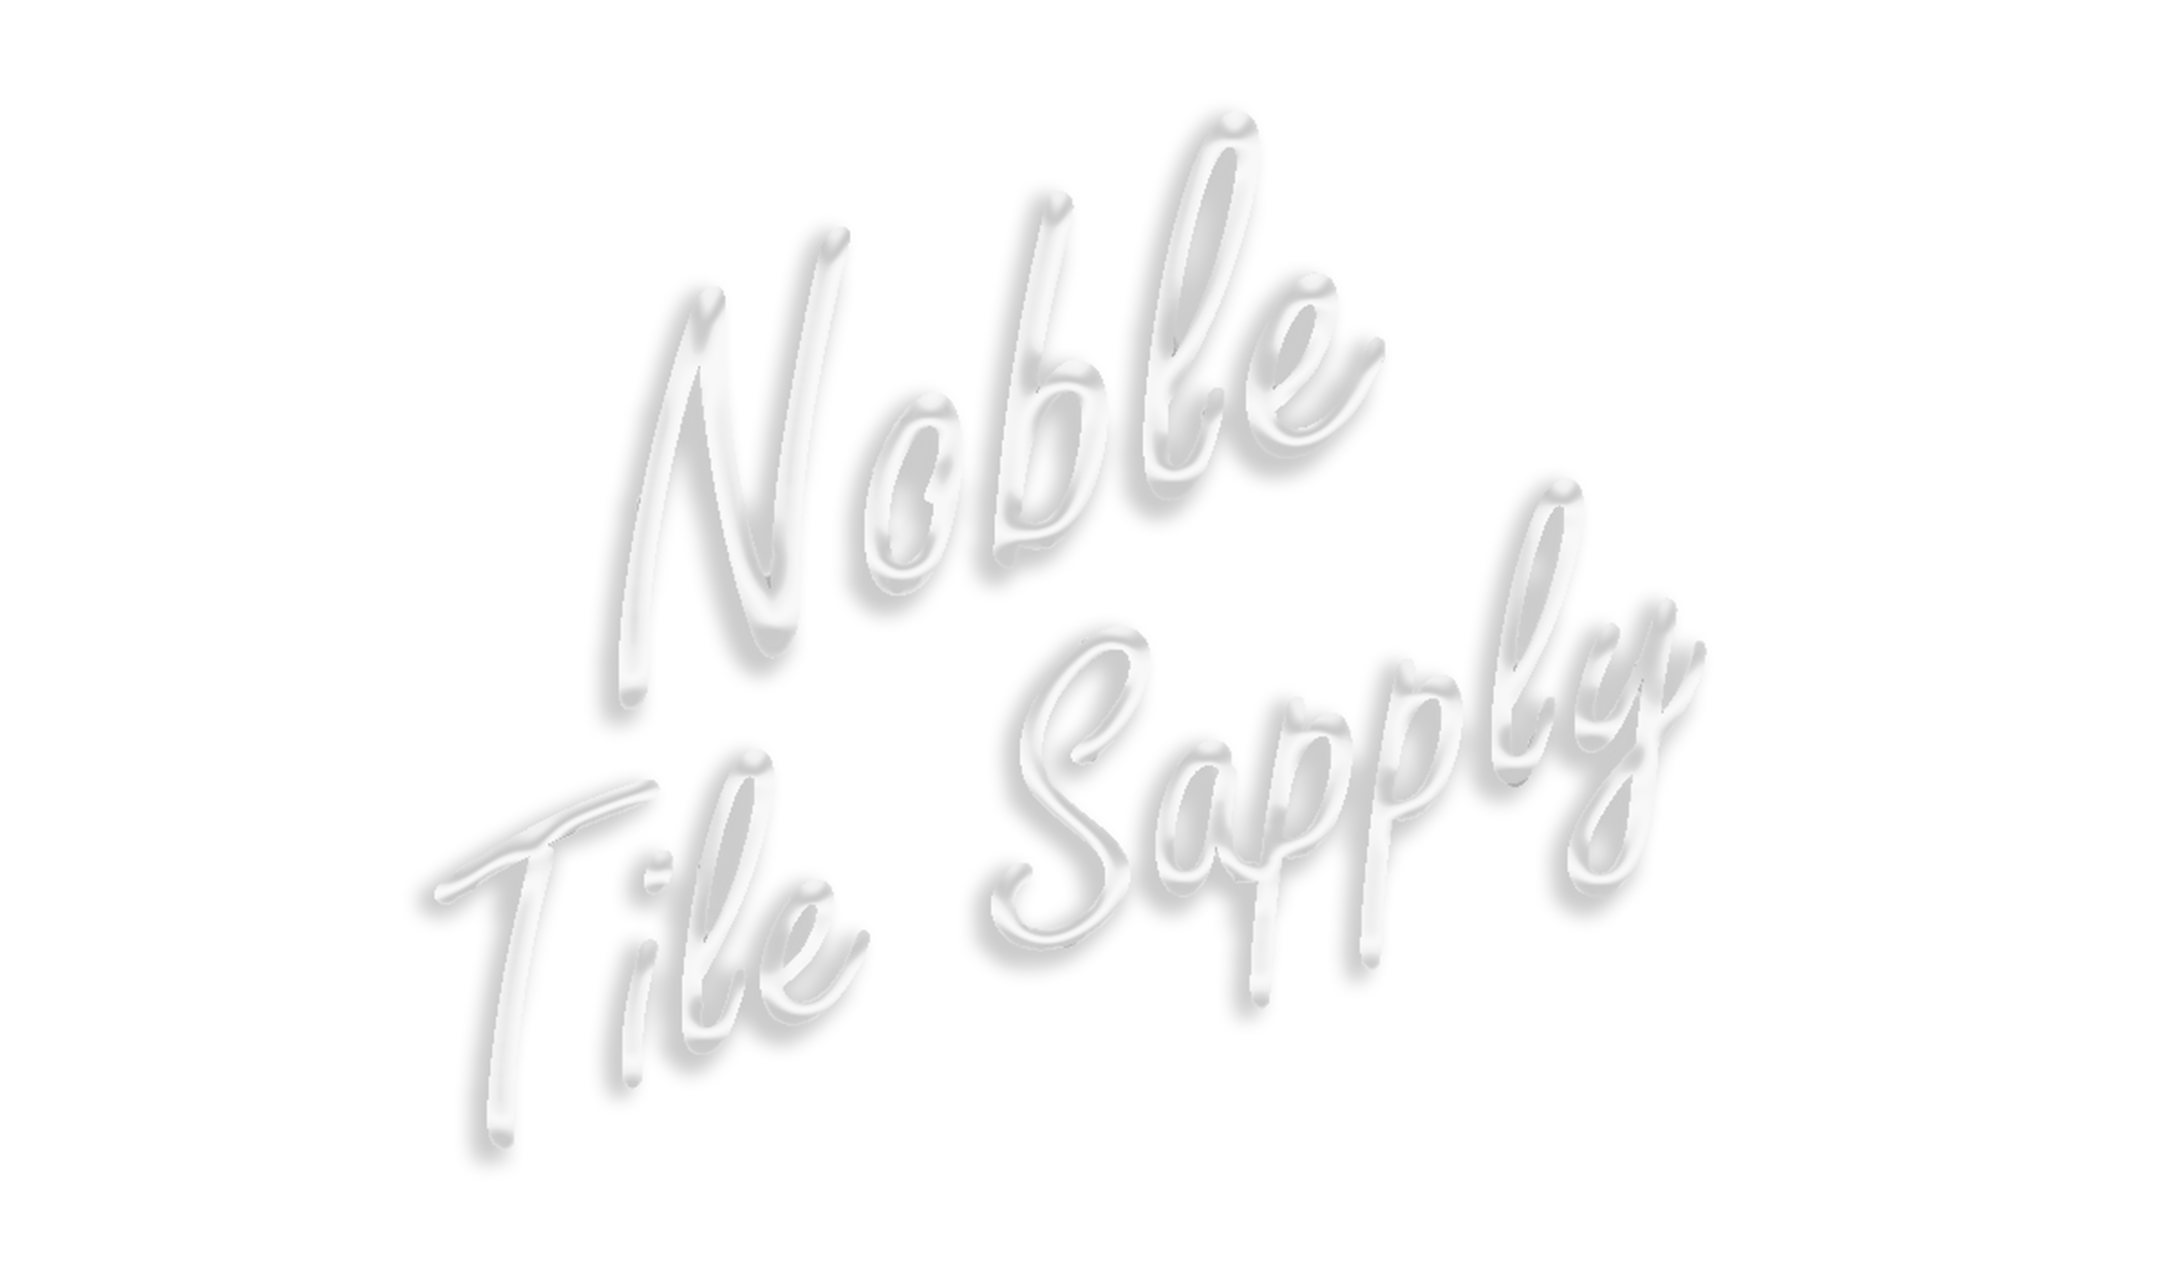 noble